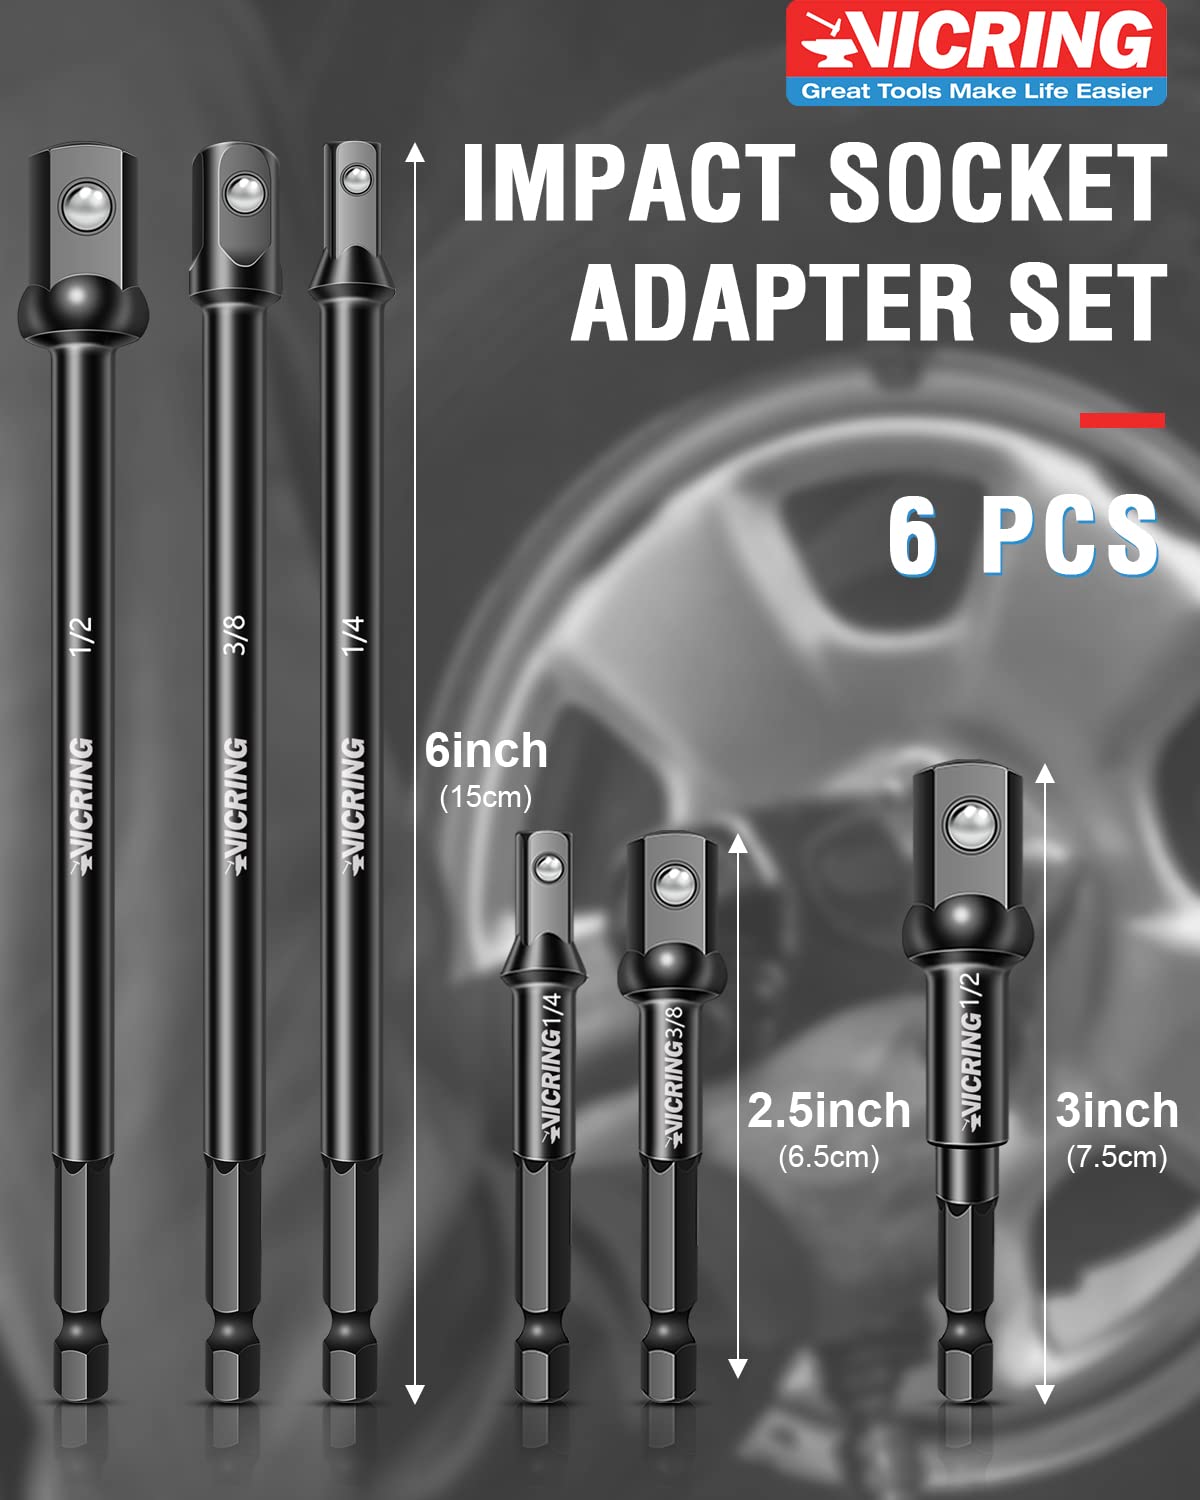 Impact Socket Adapter Set Impact Driver Socket Extension Set 1/4 3/8 1/2 Drive Socket Adapter for Drill Hex Shank Socket Driver set Turn Impact Drill Into High Torque Impact Wrench (6Pcs, 3" & 6")